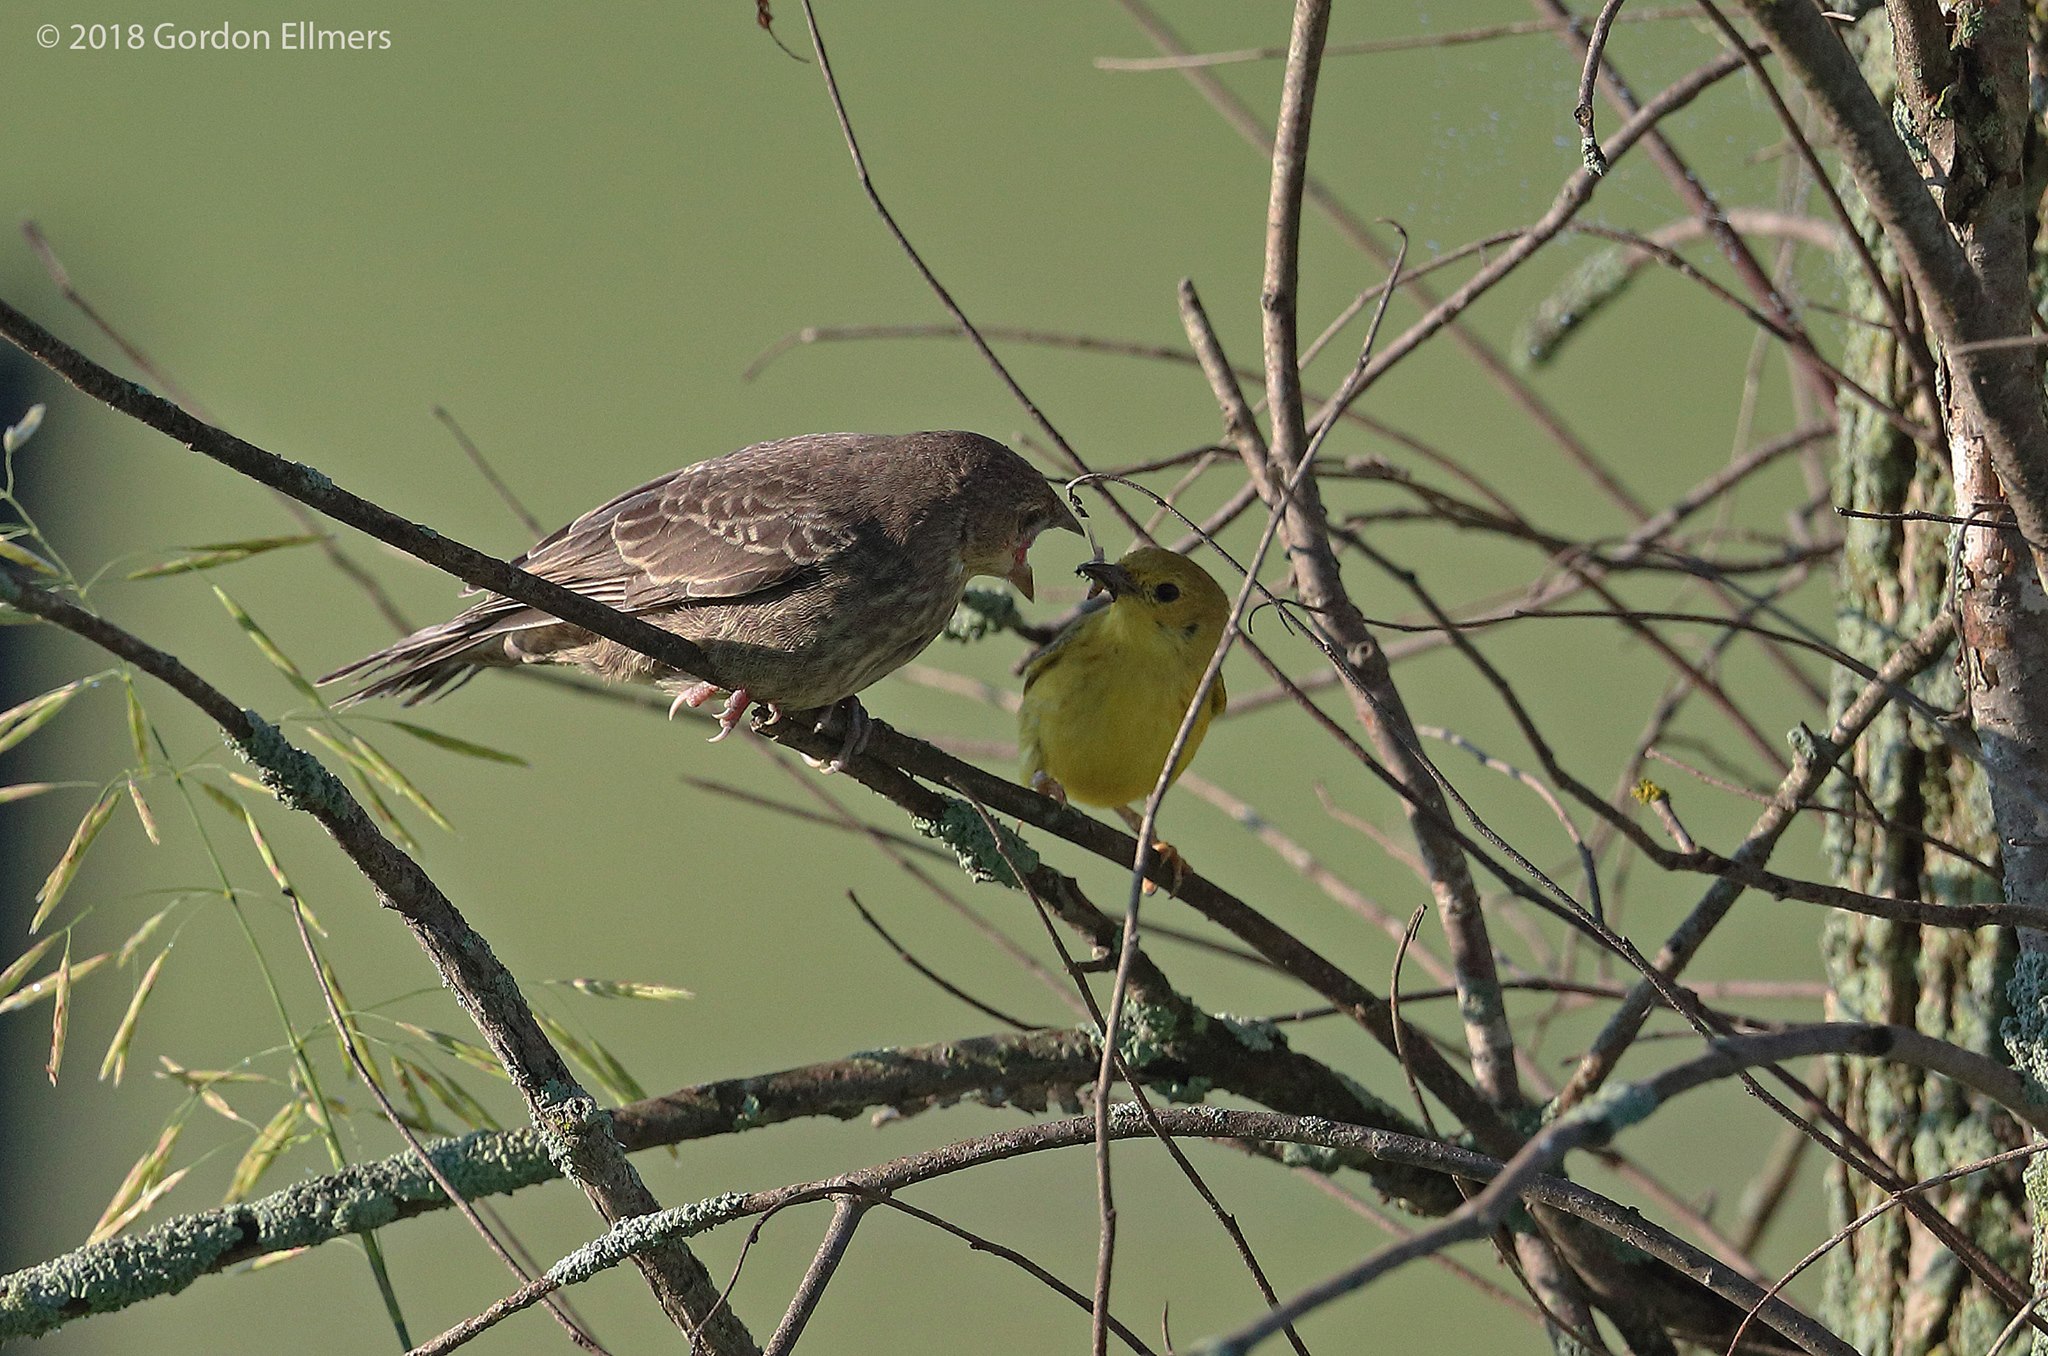 Brown Cowbird Demanding Food From Yellow Warbler "Parent"